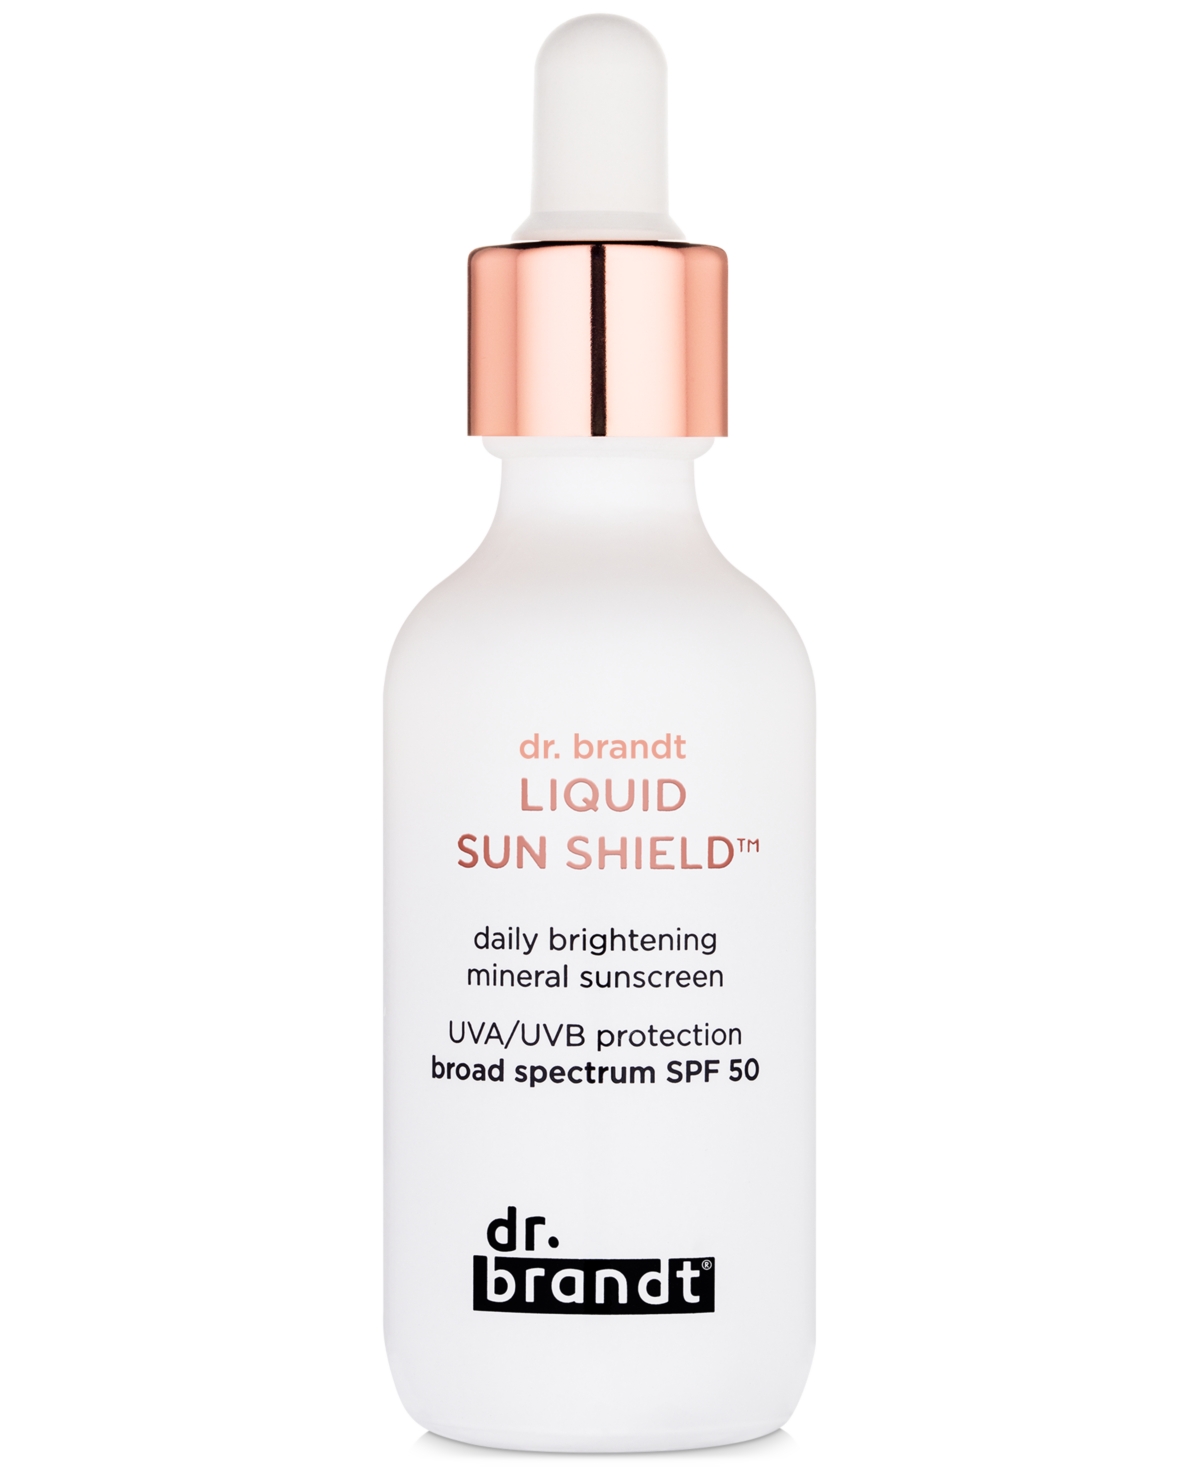 dr. brandt Liquid Sun Shield Spf 50, 1.7-oz.